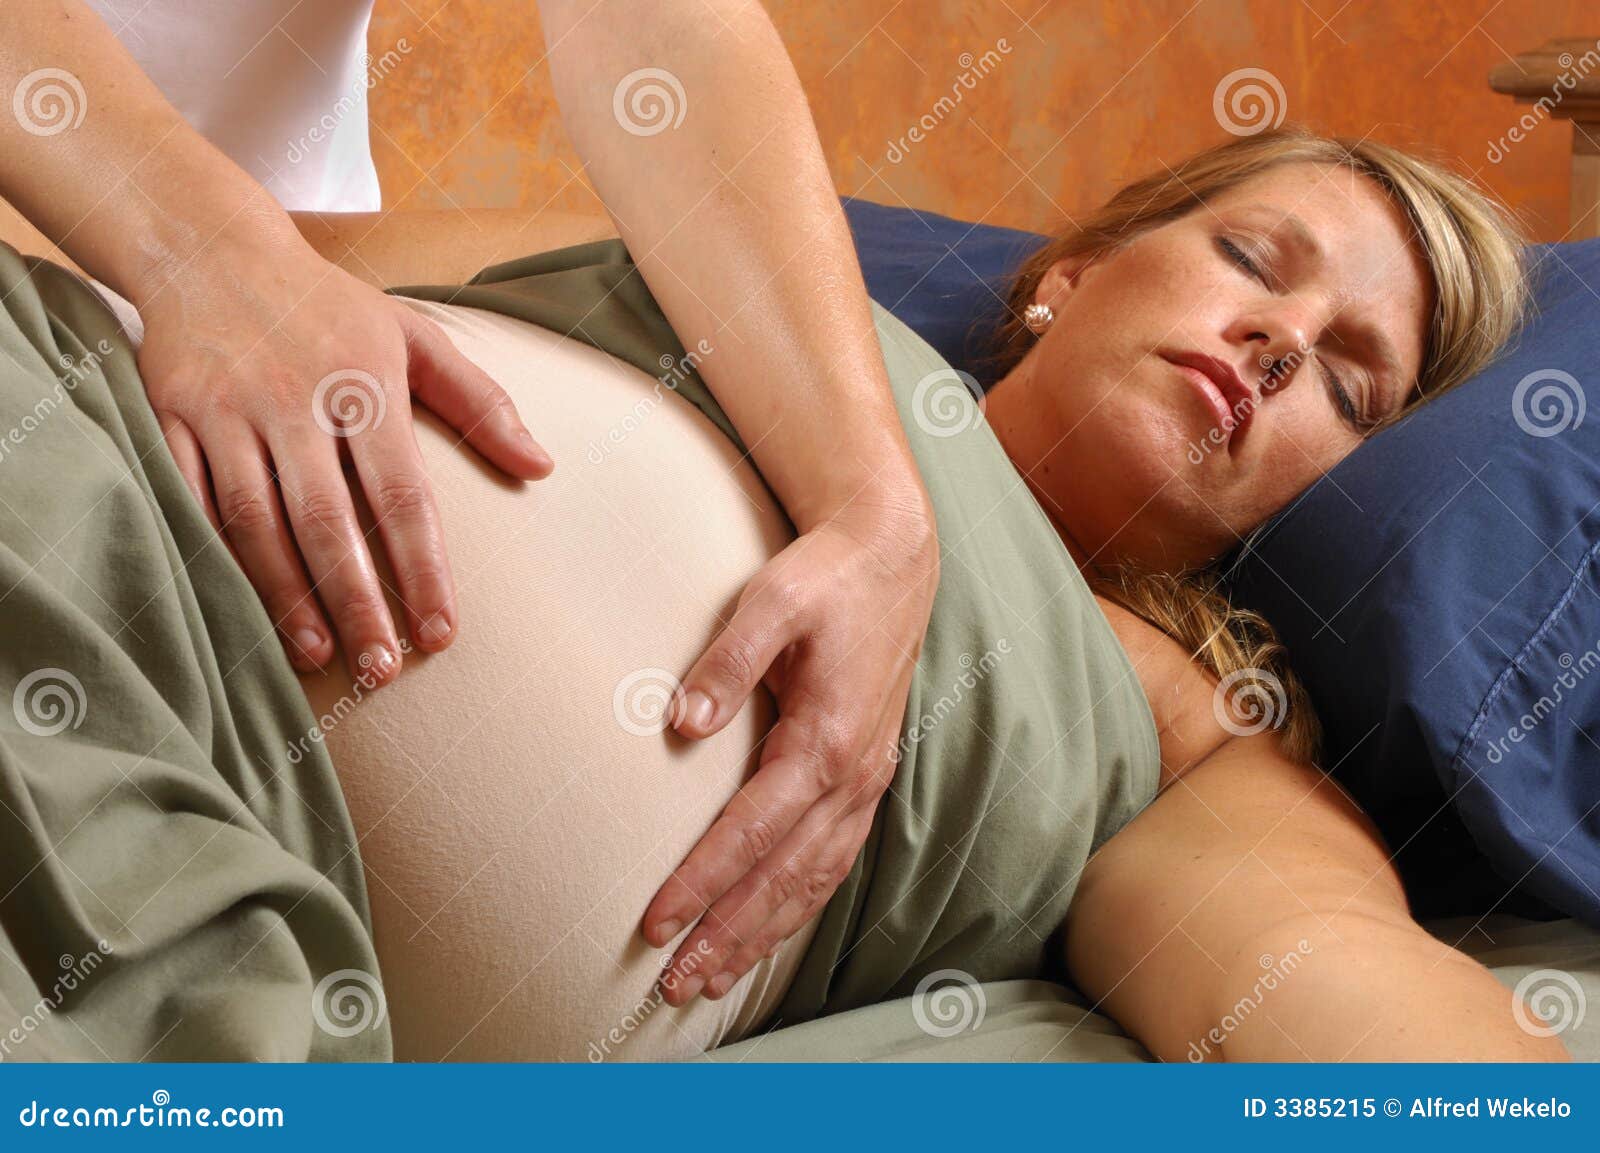 Massage Pregnant Women 27